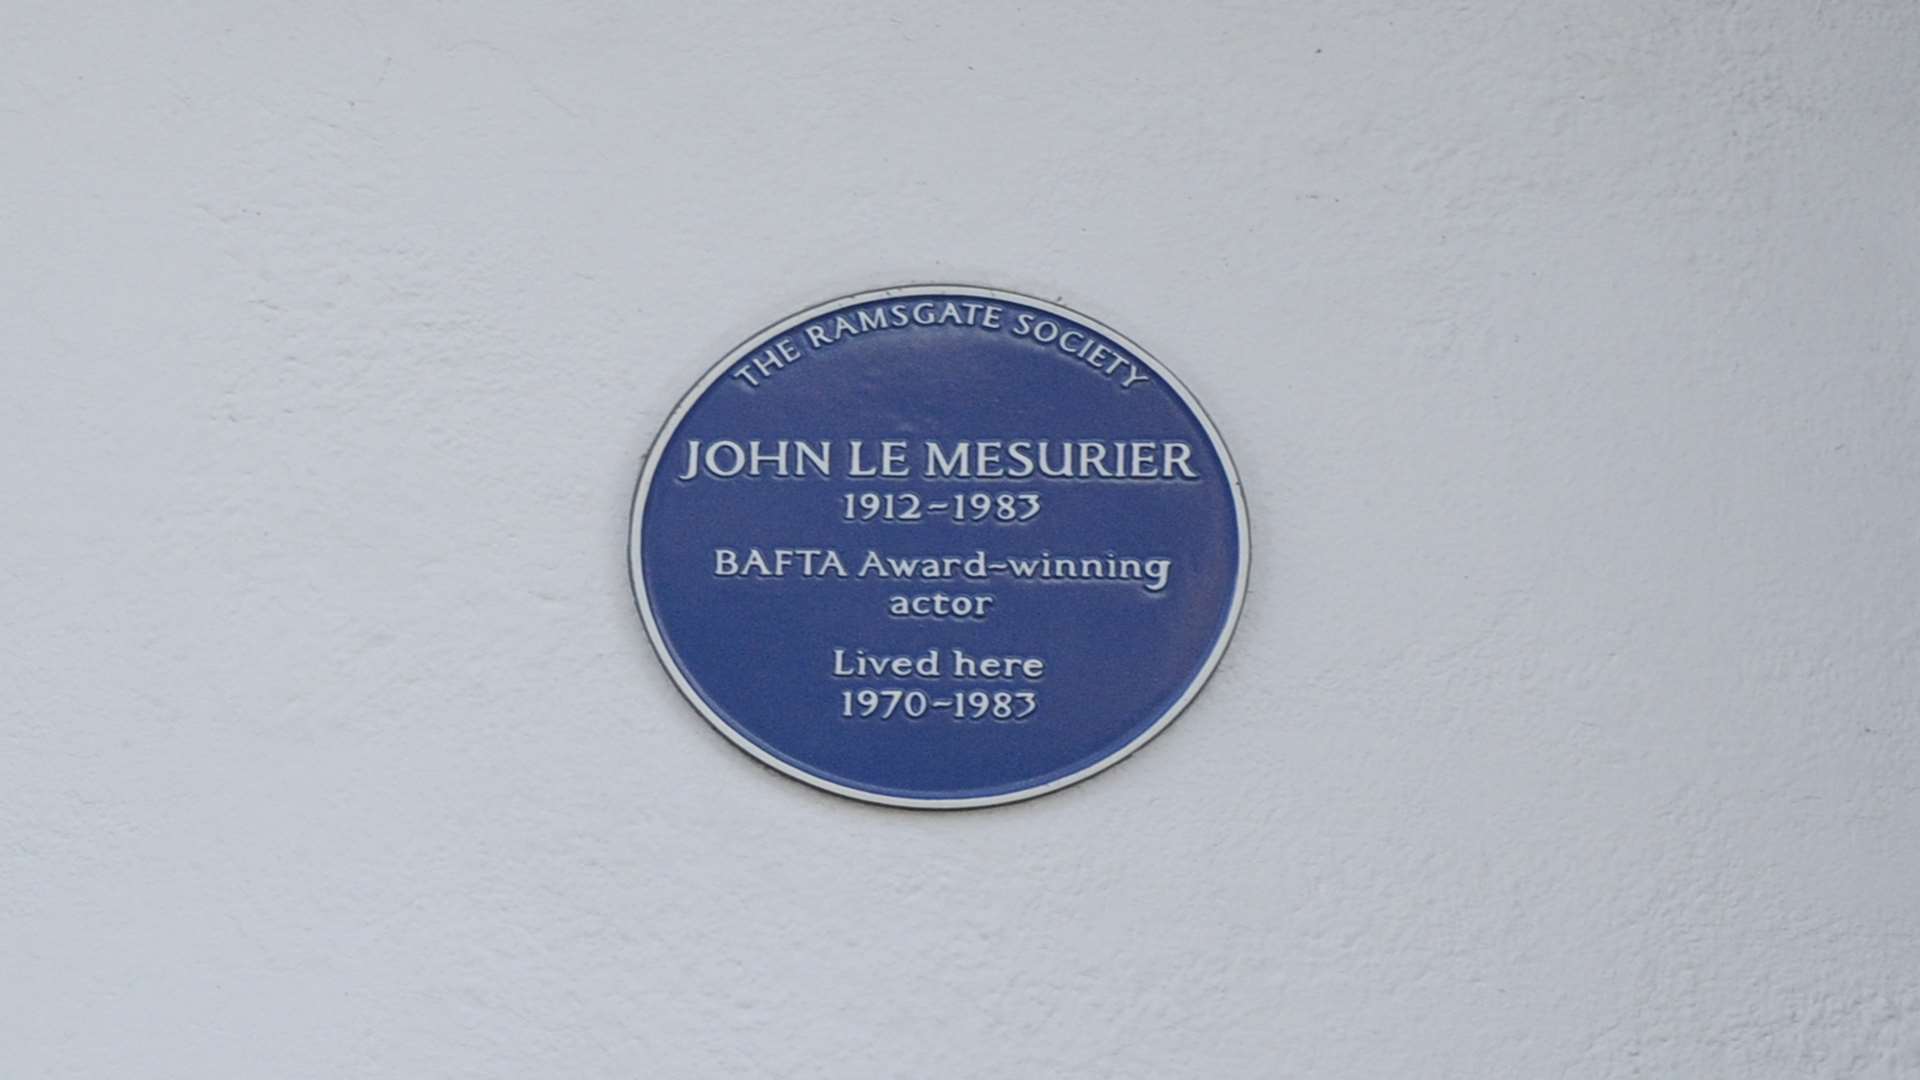 John Le Mesurier, London Road, Ramsgate